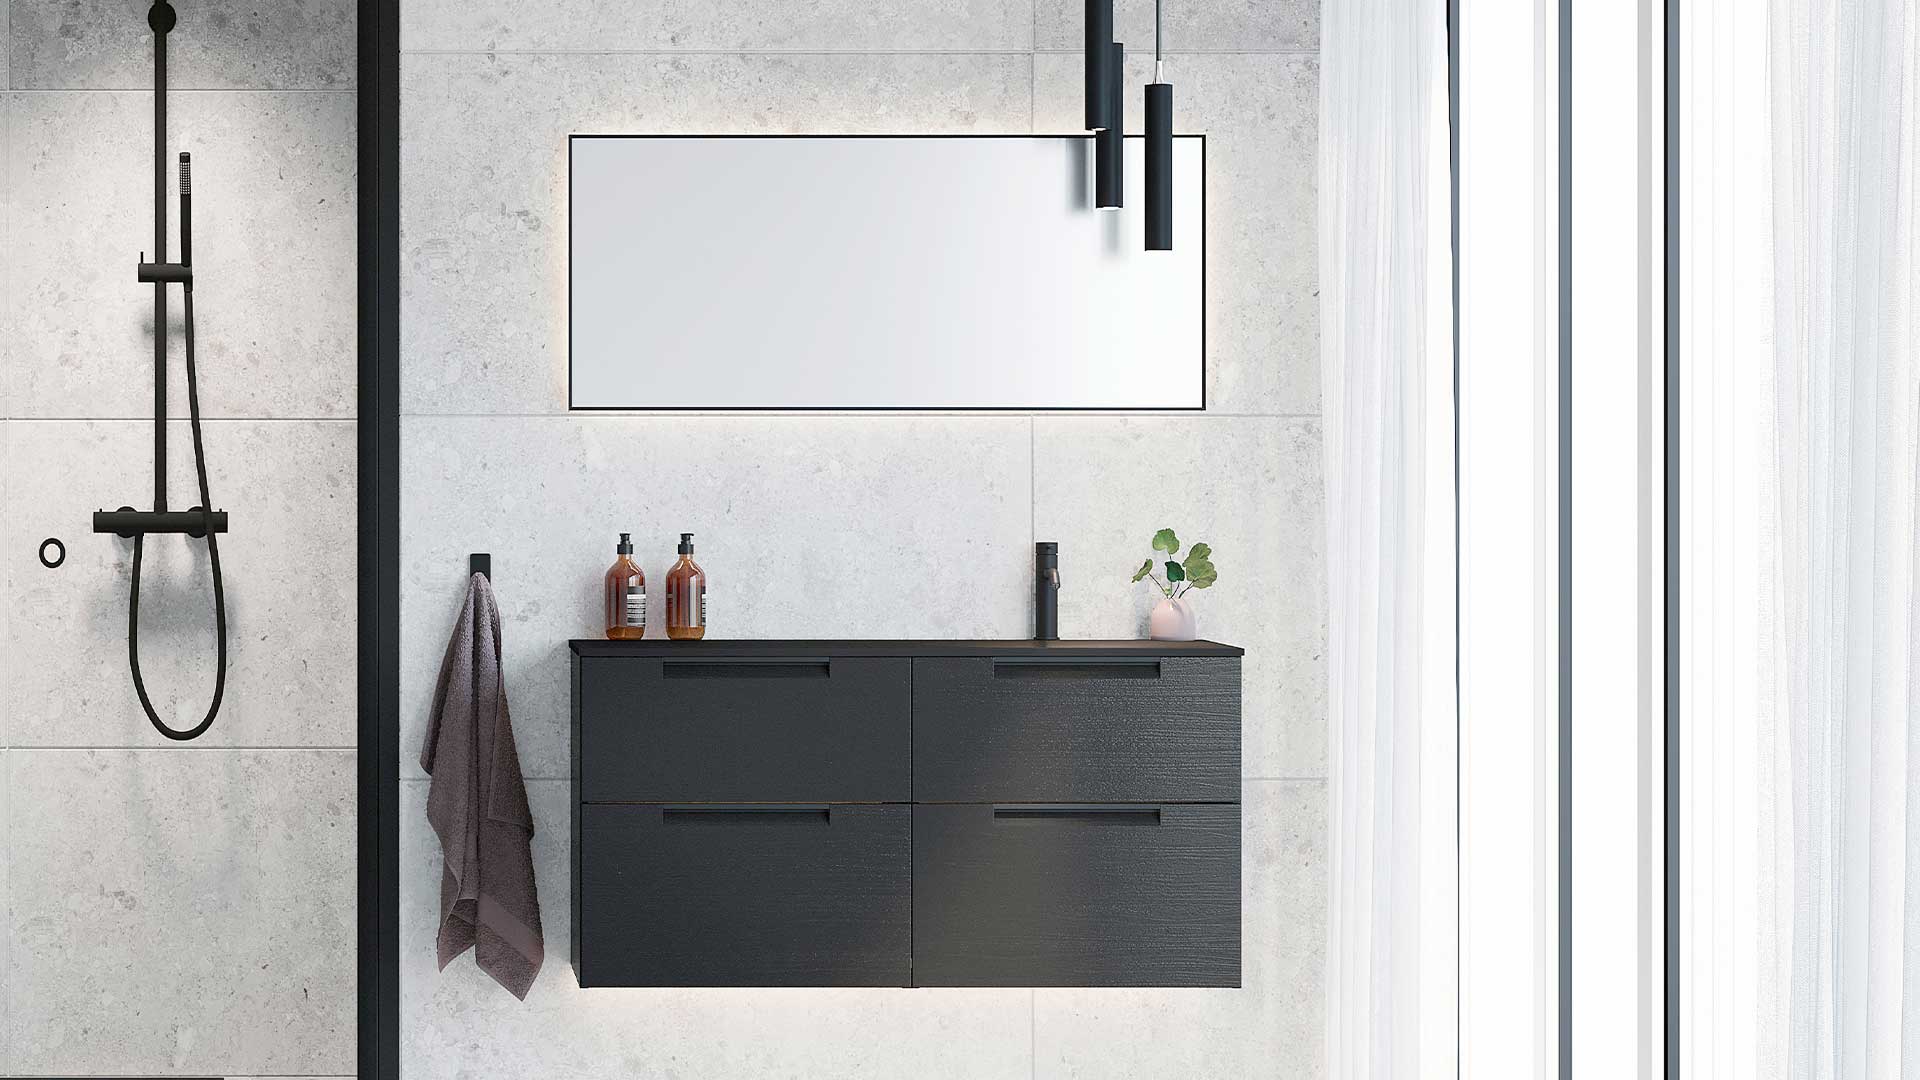 Avlangt speil med Ambilight og svart ramme kombinert med svart pendelbelysning på et stort, lyst bad.    